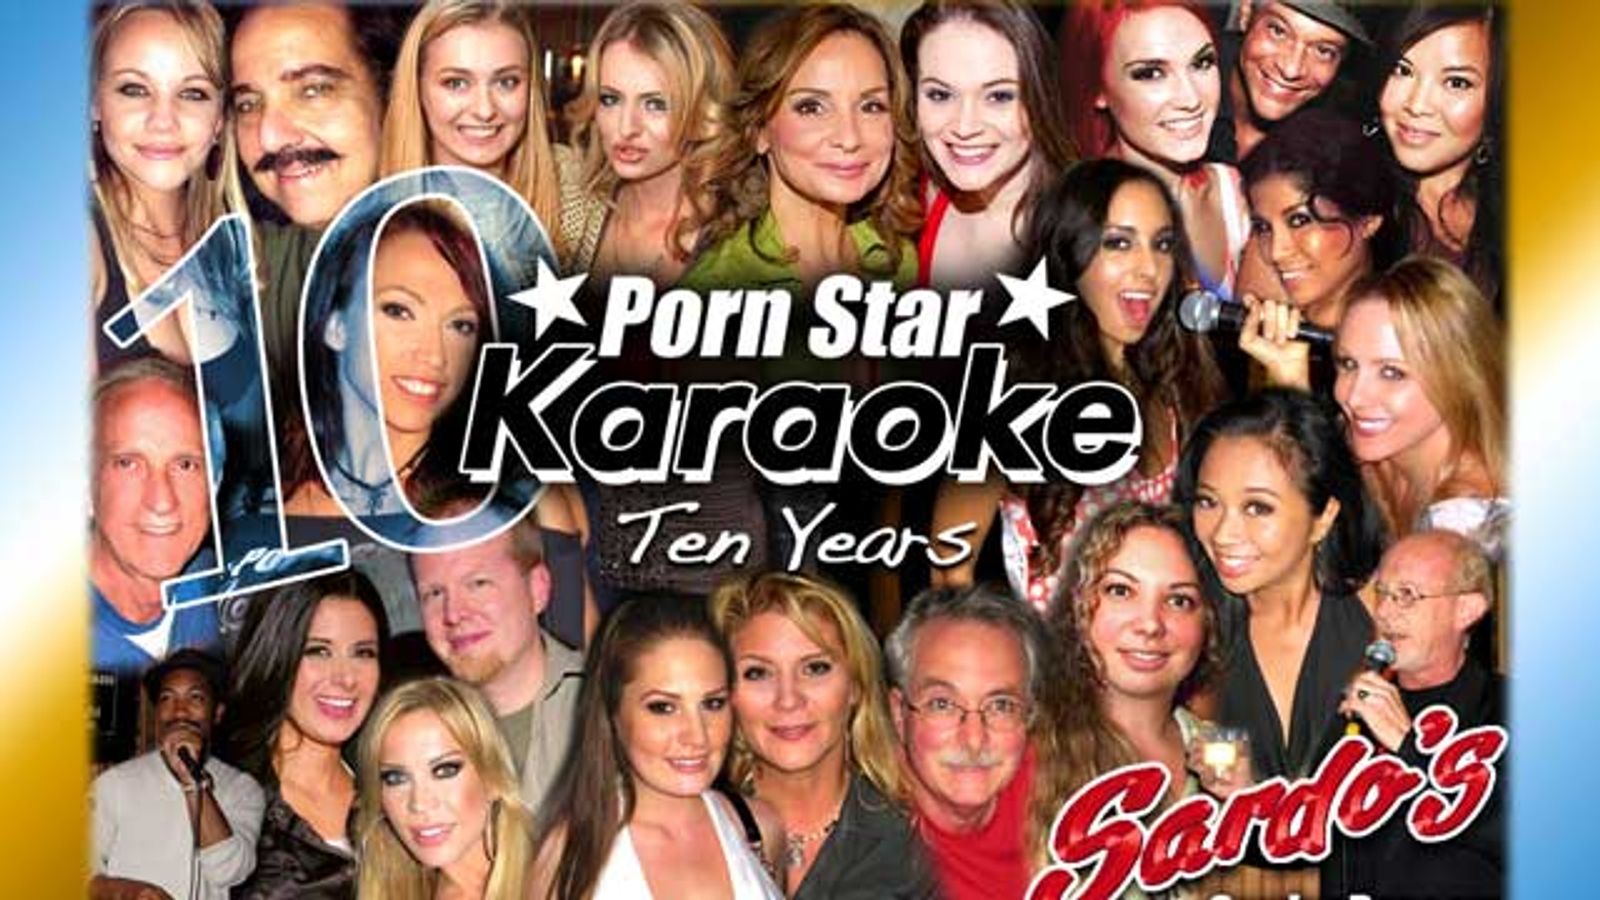 Porn Star Karaoke Celebrates 10 Years at Sardo's